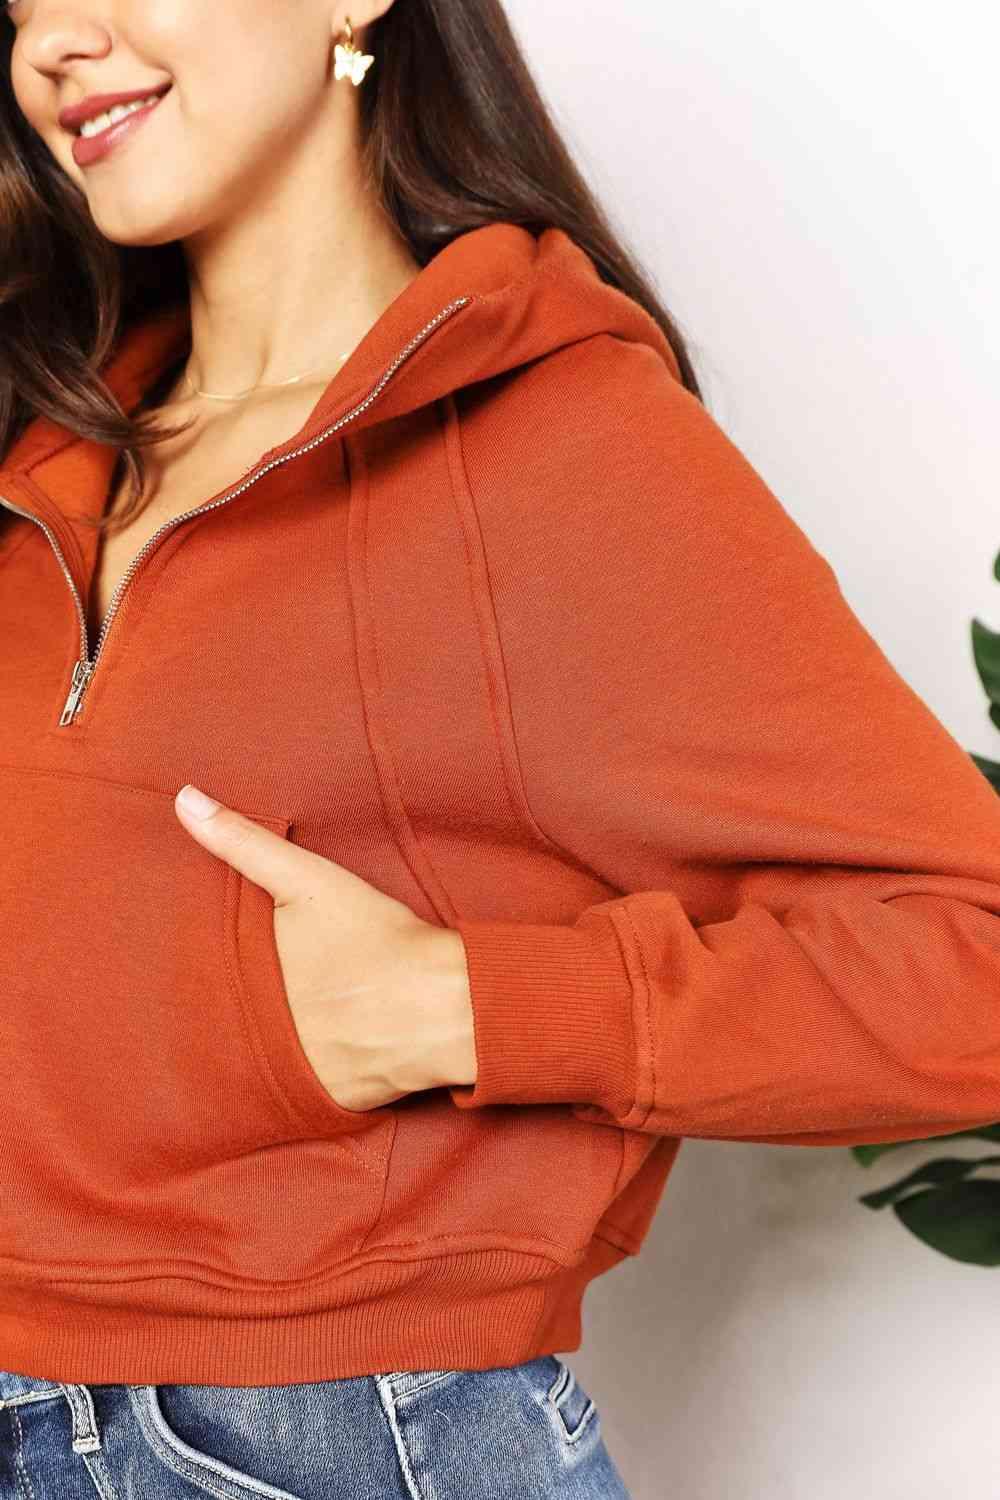 Double Take Half-Zip Long Sleeve Hoodie - Lab Fashion, Home & Health